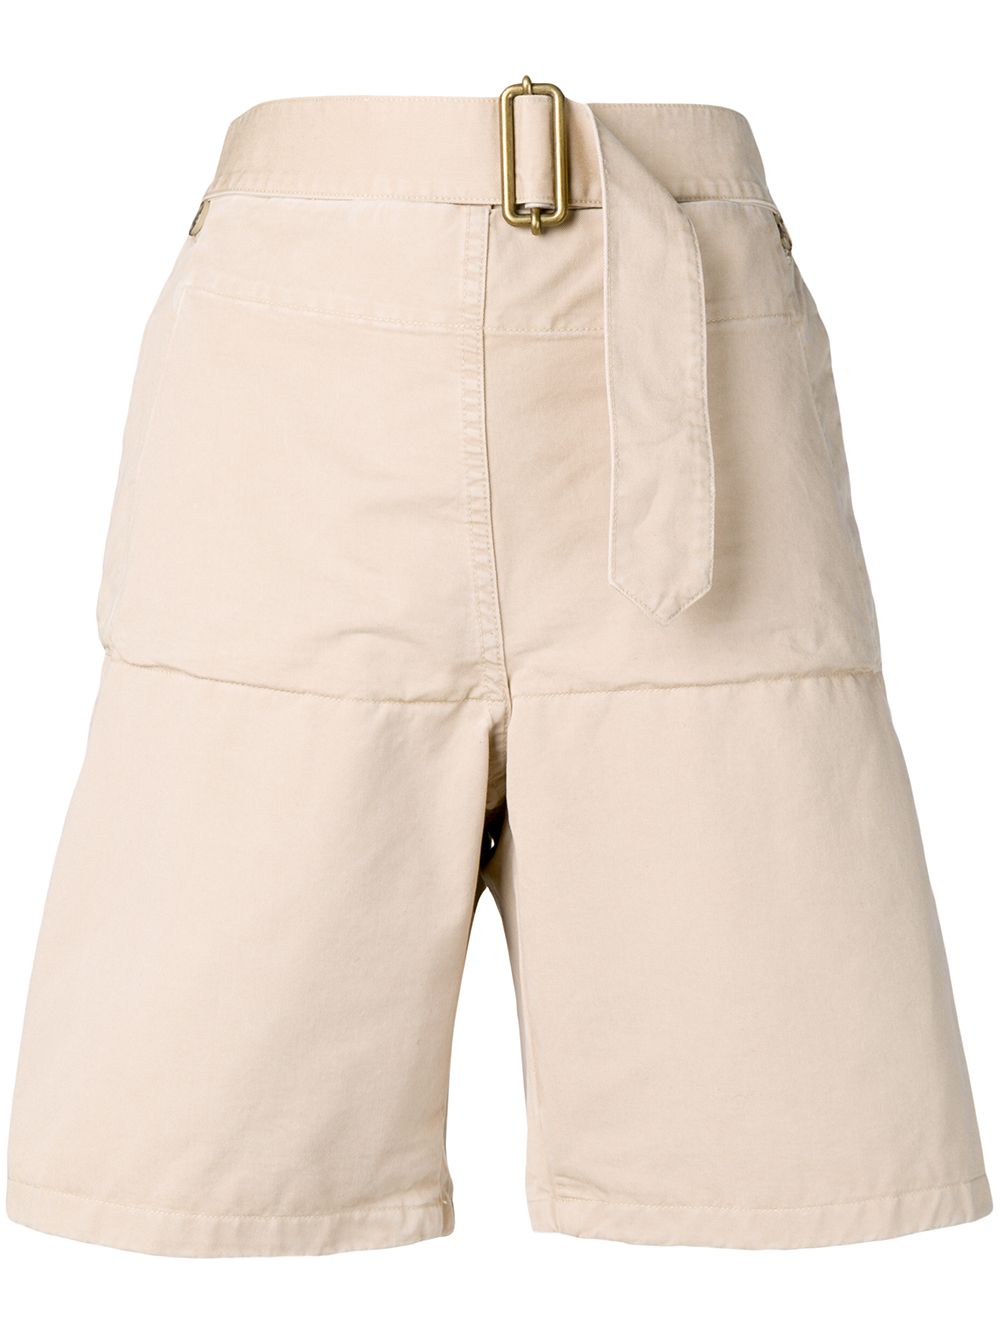 фото Jw anderson шорты-бермуды с накладными карманами